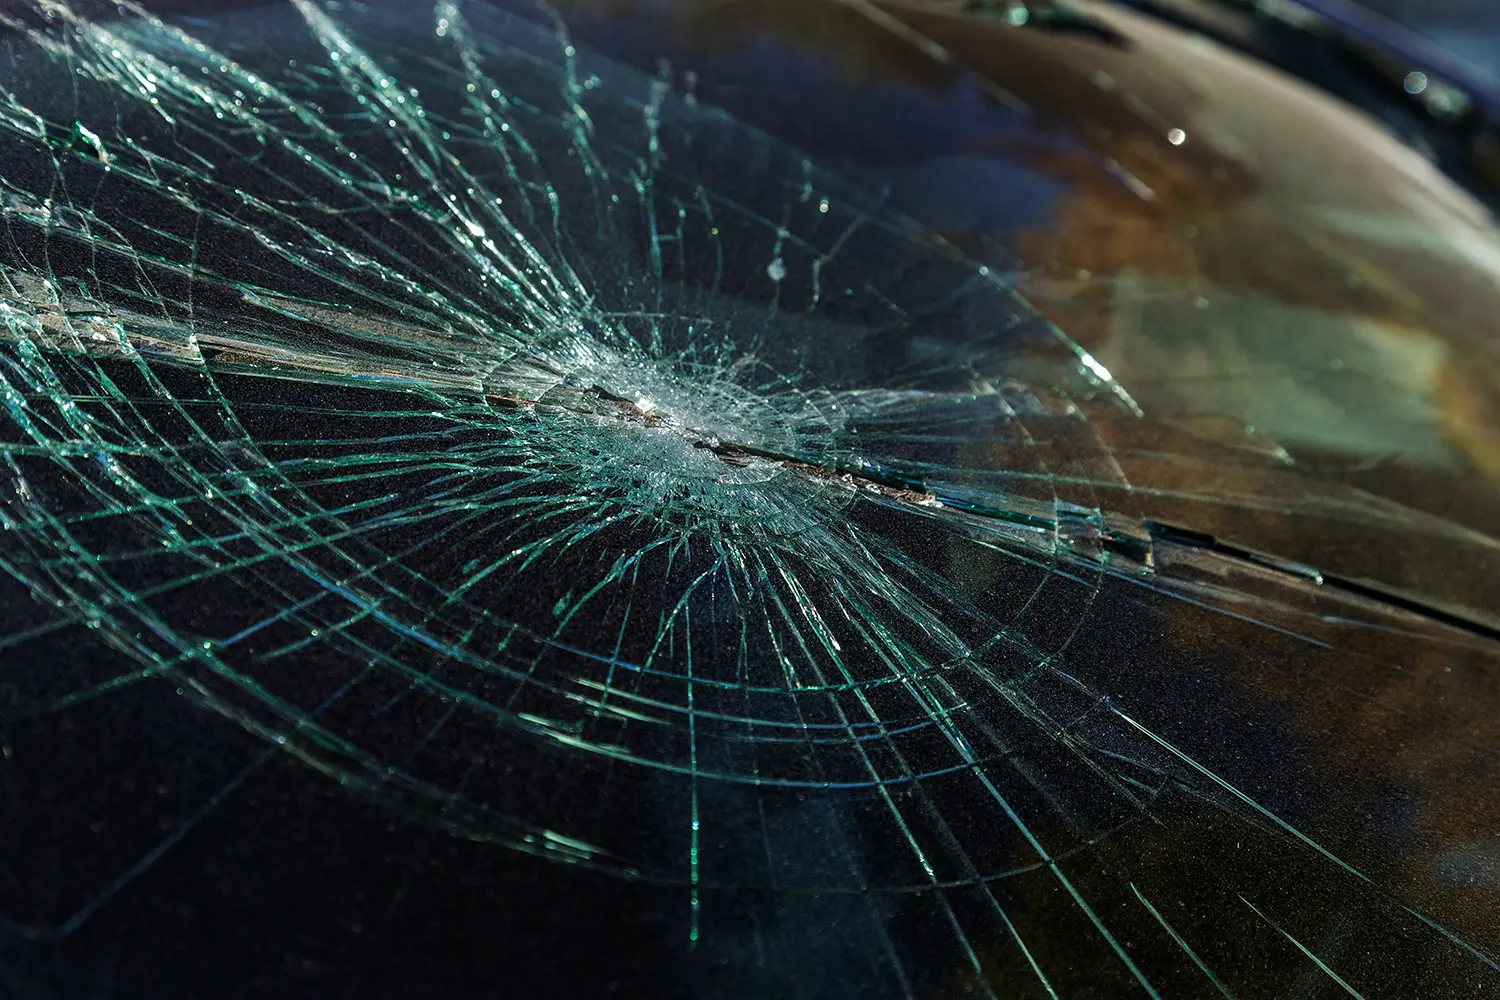 smashed windscreen on car